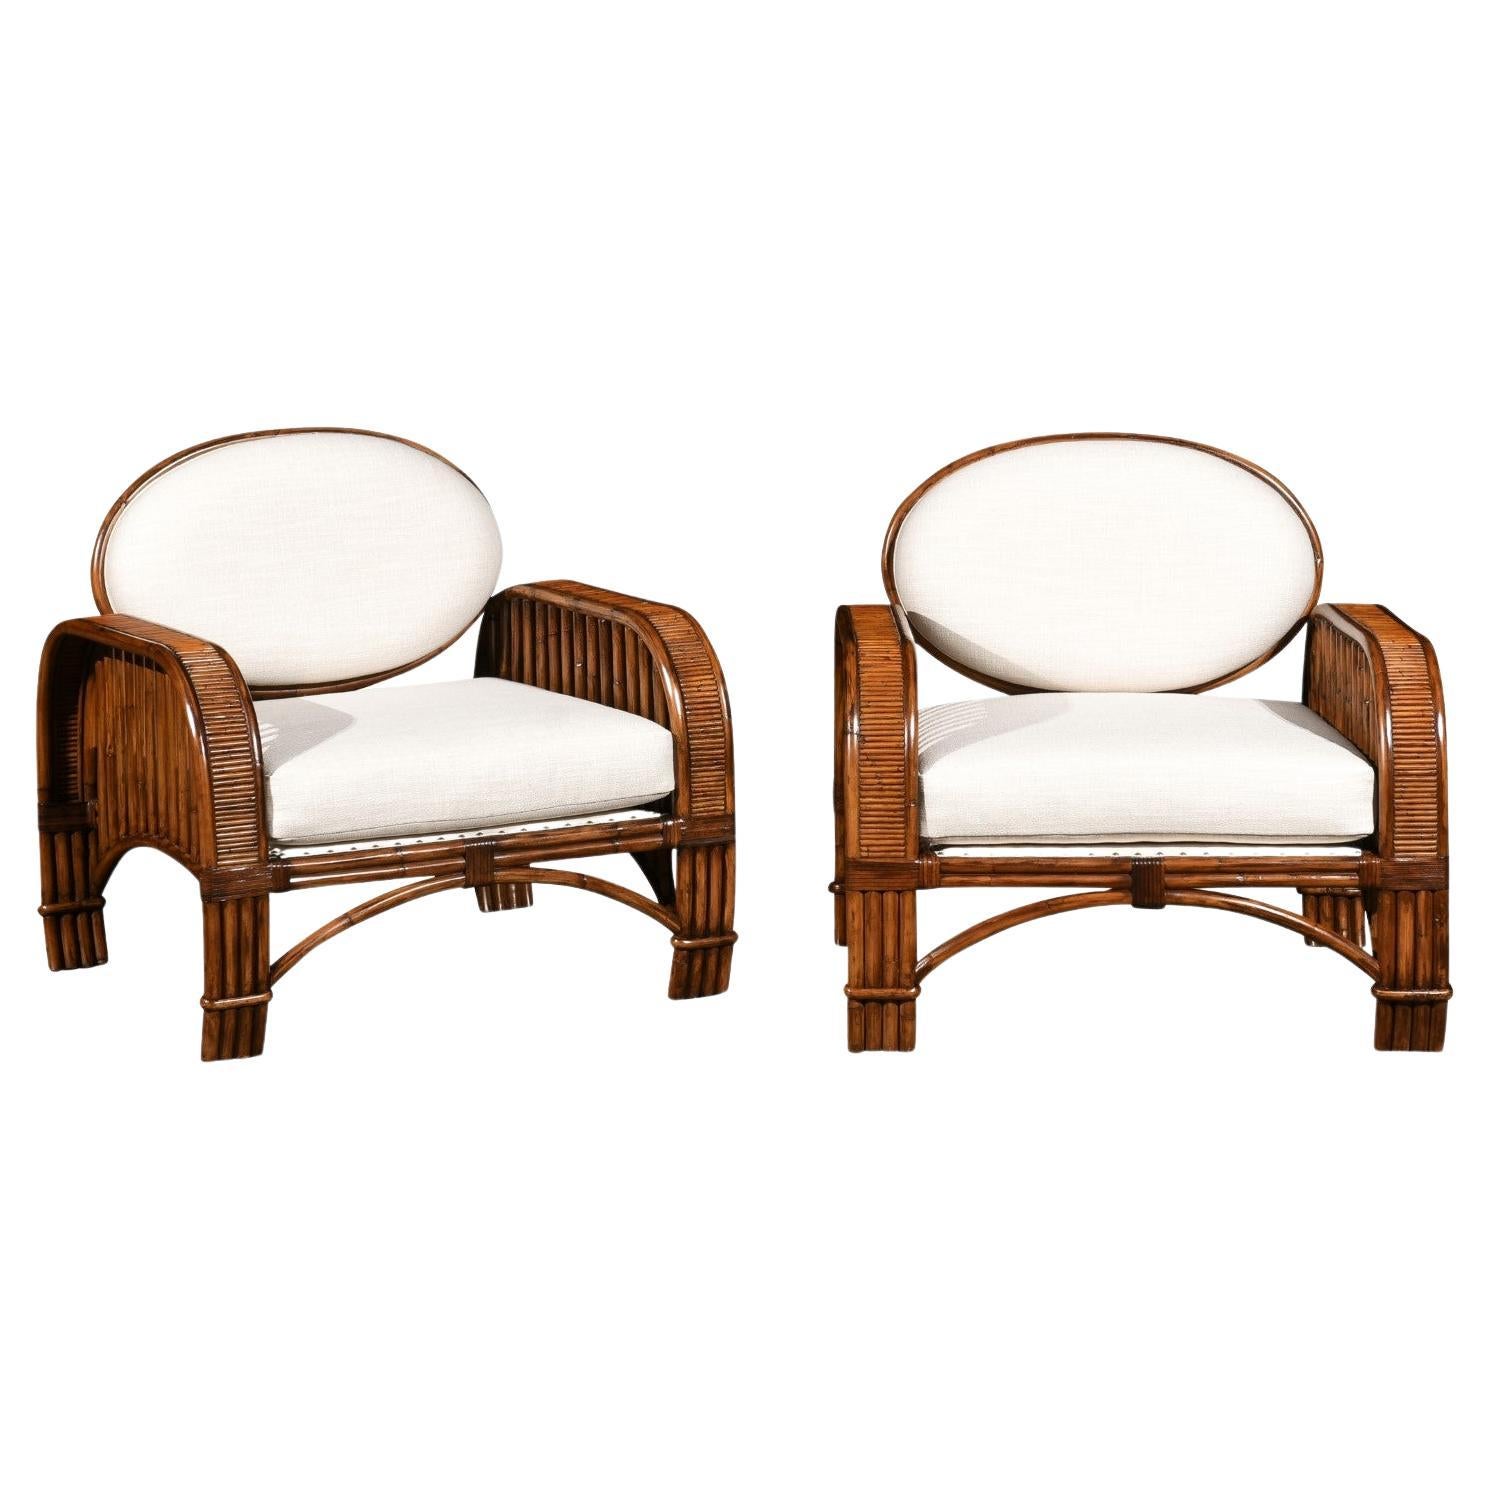 Striking Pair of Art Deco Influenced Club Chairs by Brown Jordan, circa 1980 For Sale